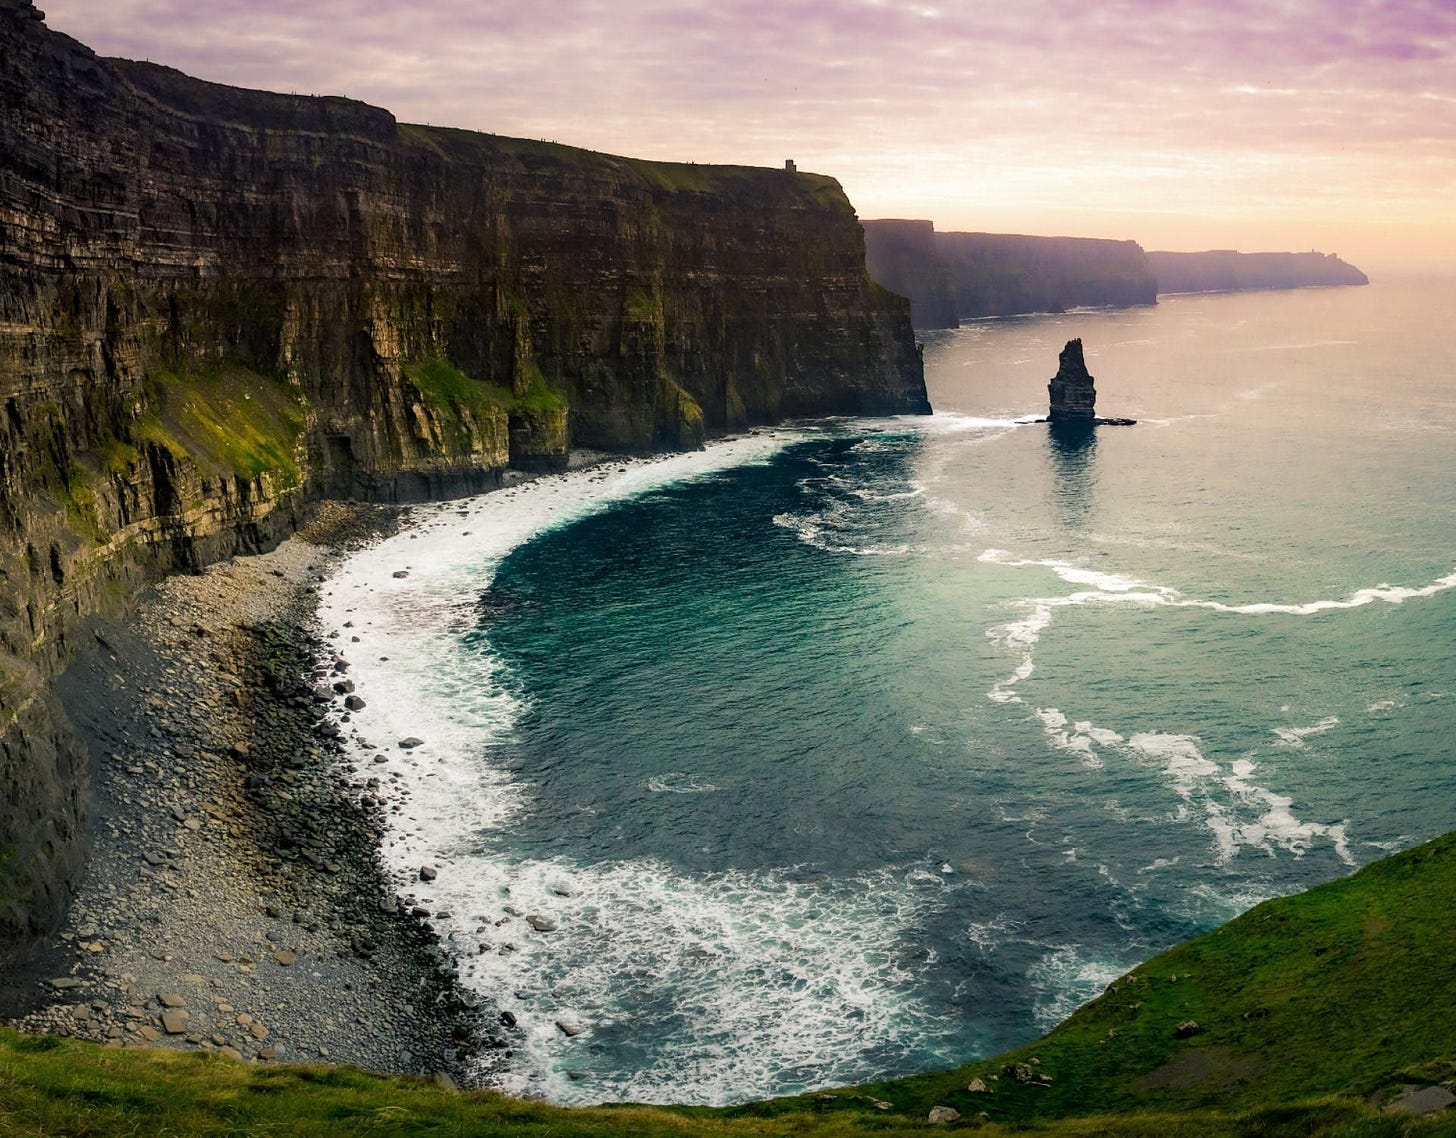 Ireland Cliffs, Famous Cliffs in Ireland | Cliffs of Moher